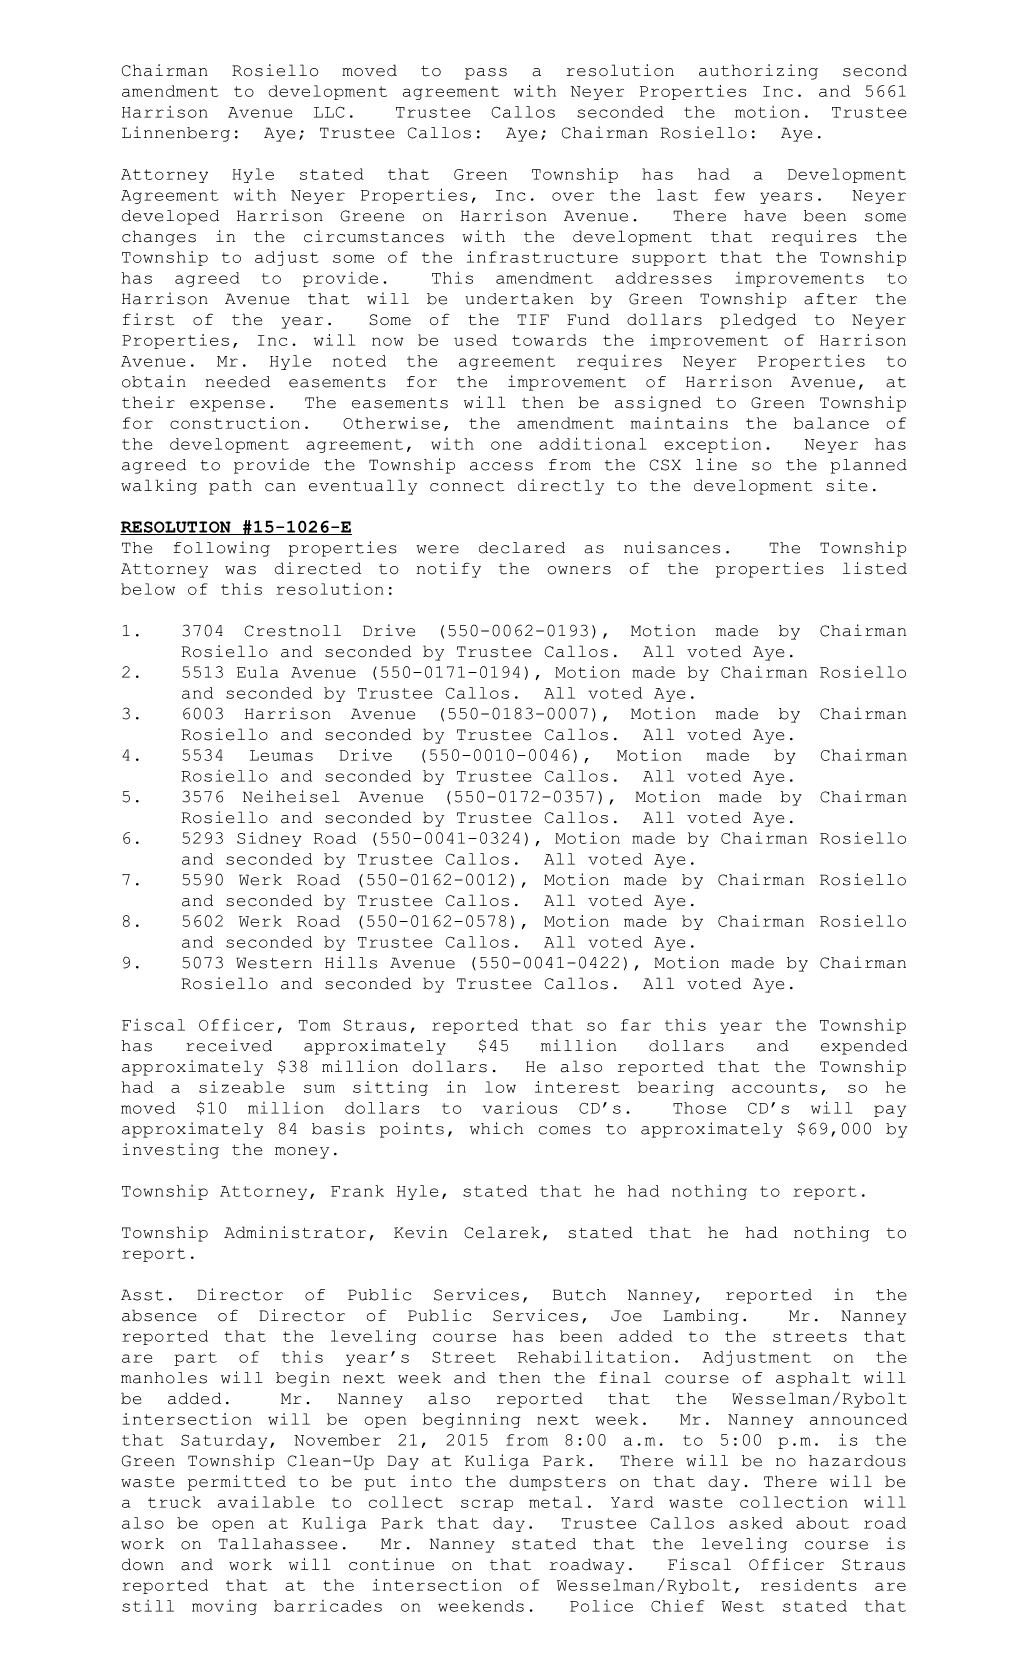 Inter-Office Memorandum s1